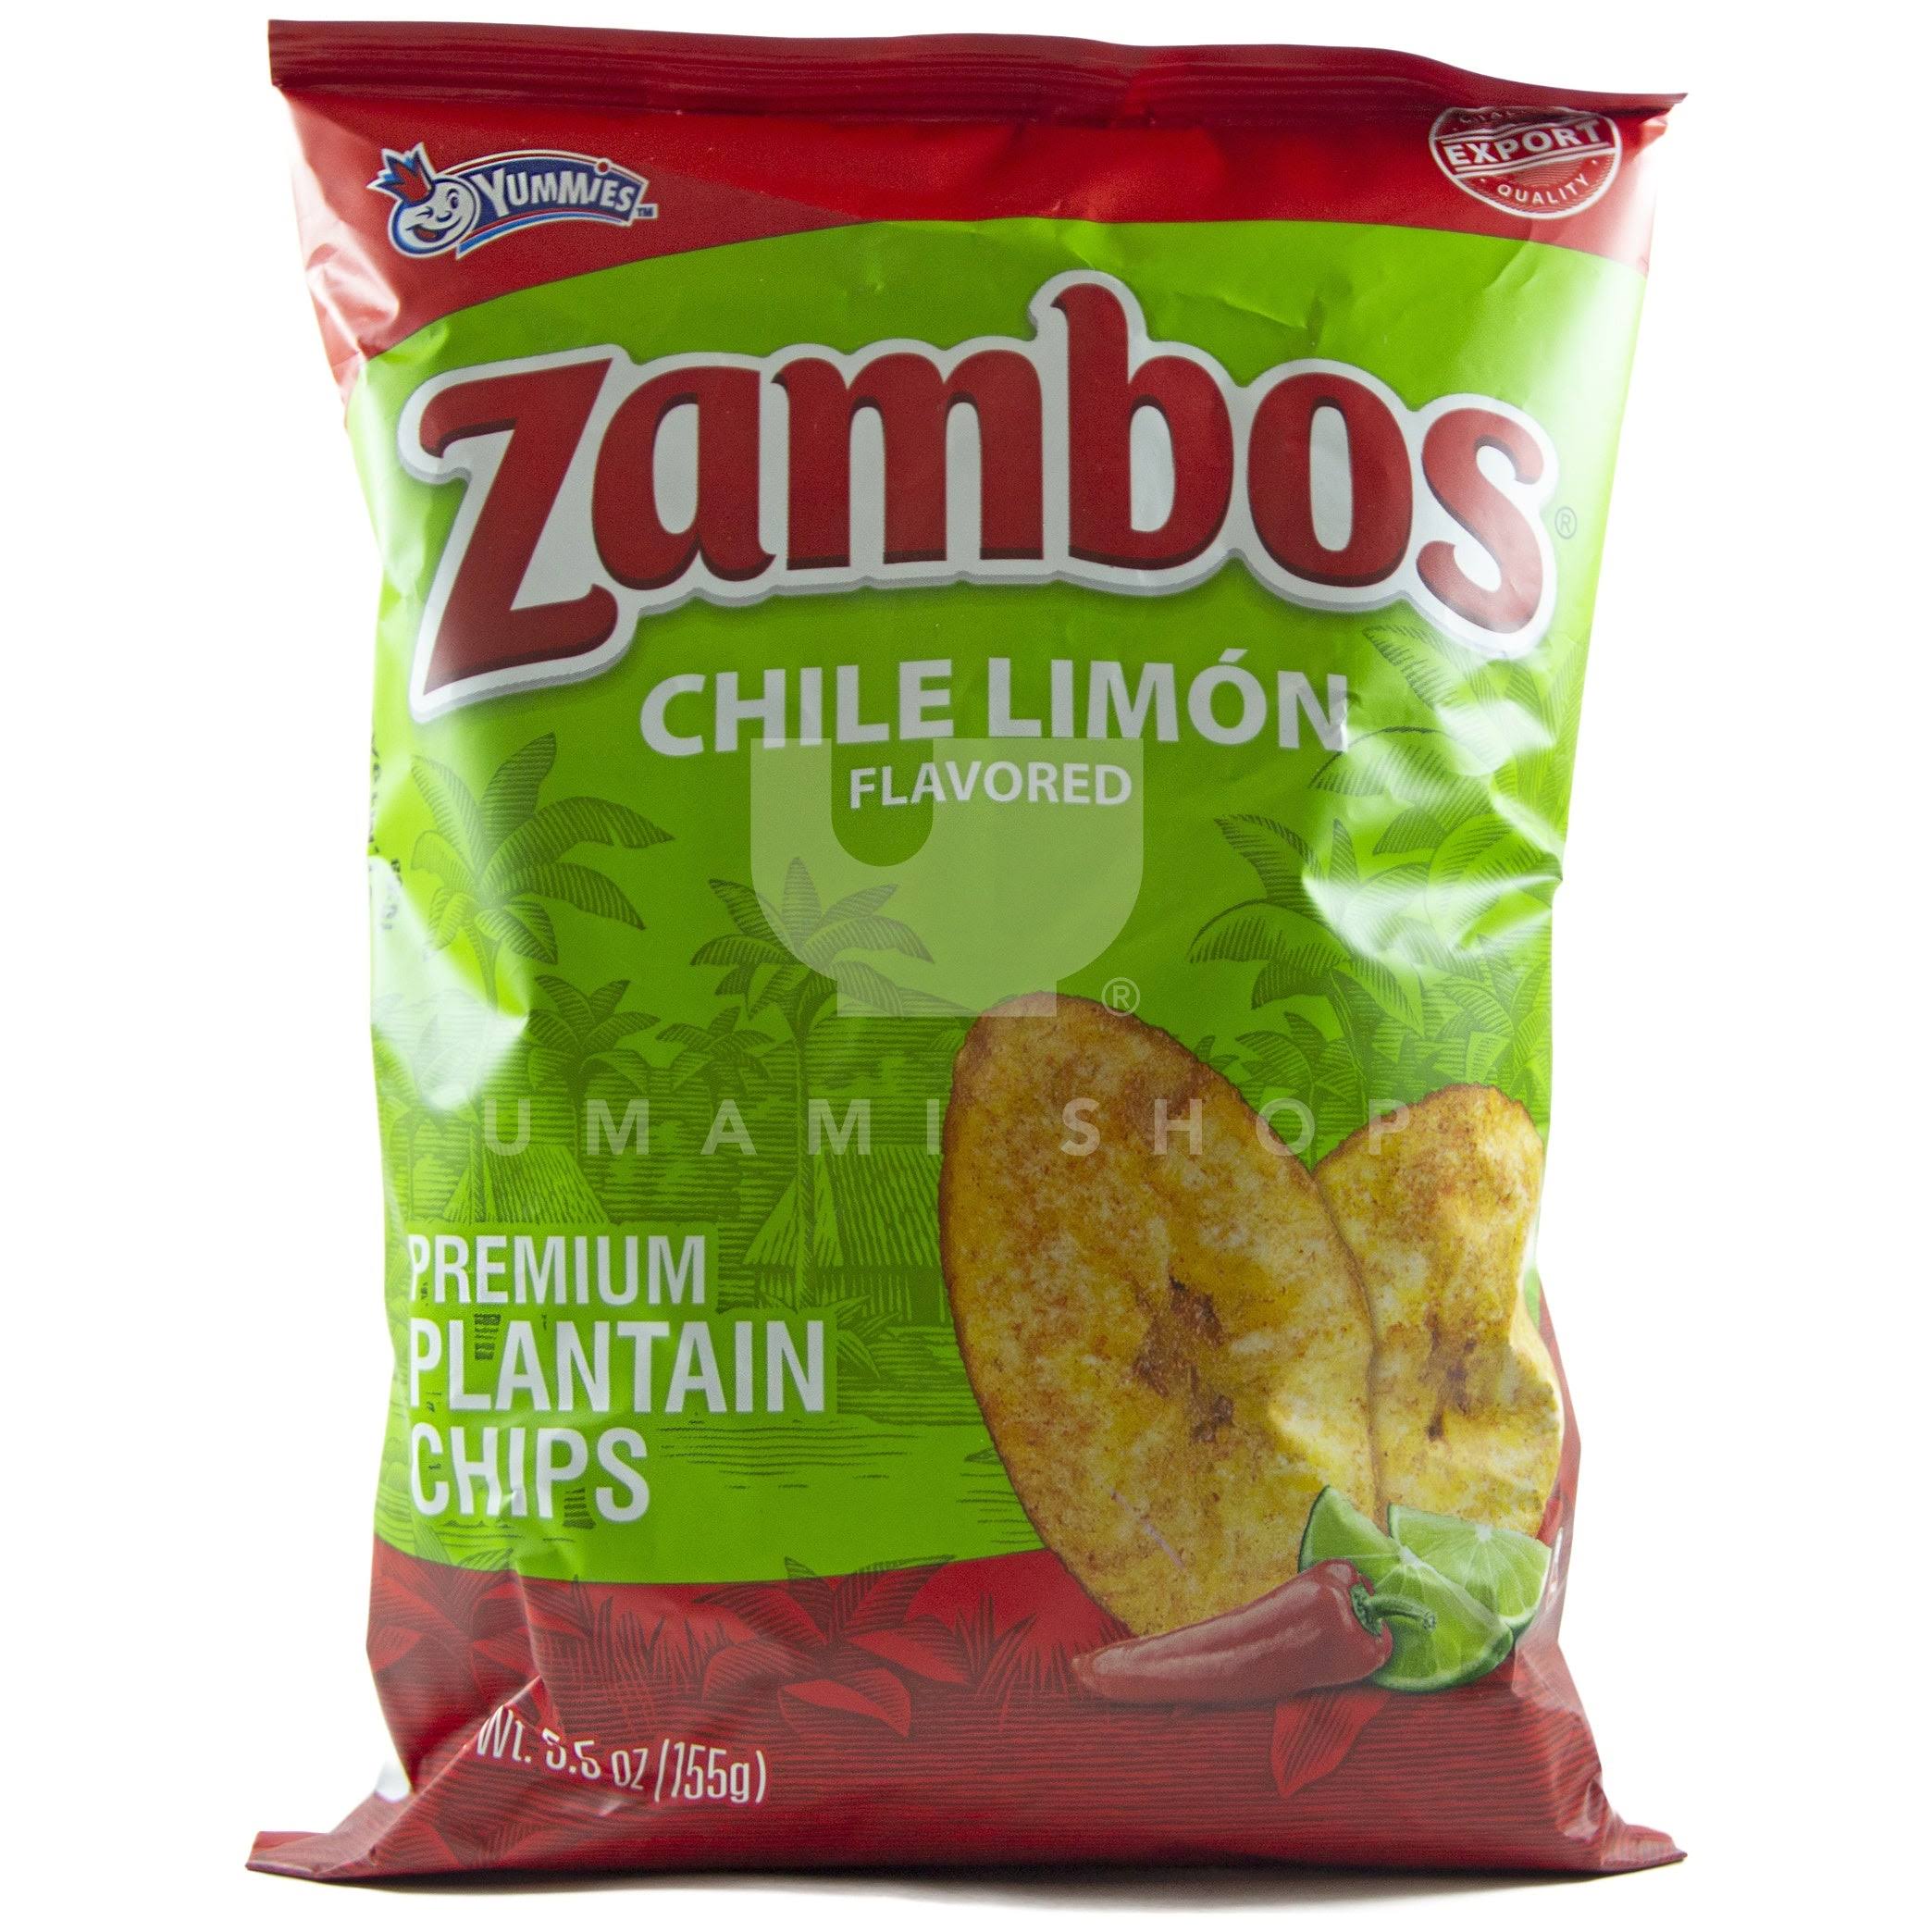 Yummies Zambos (Chile Limon) Plantain Chips